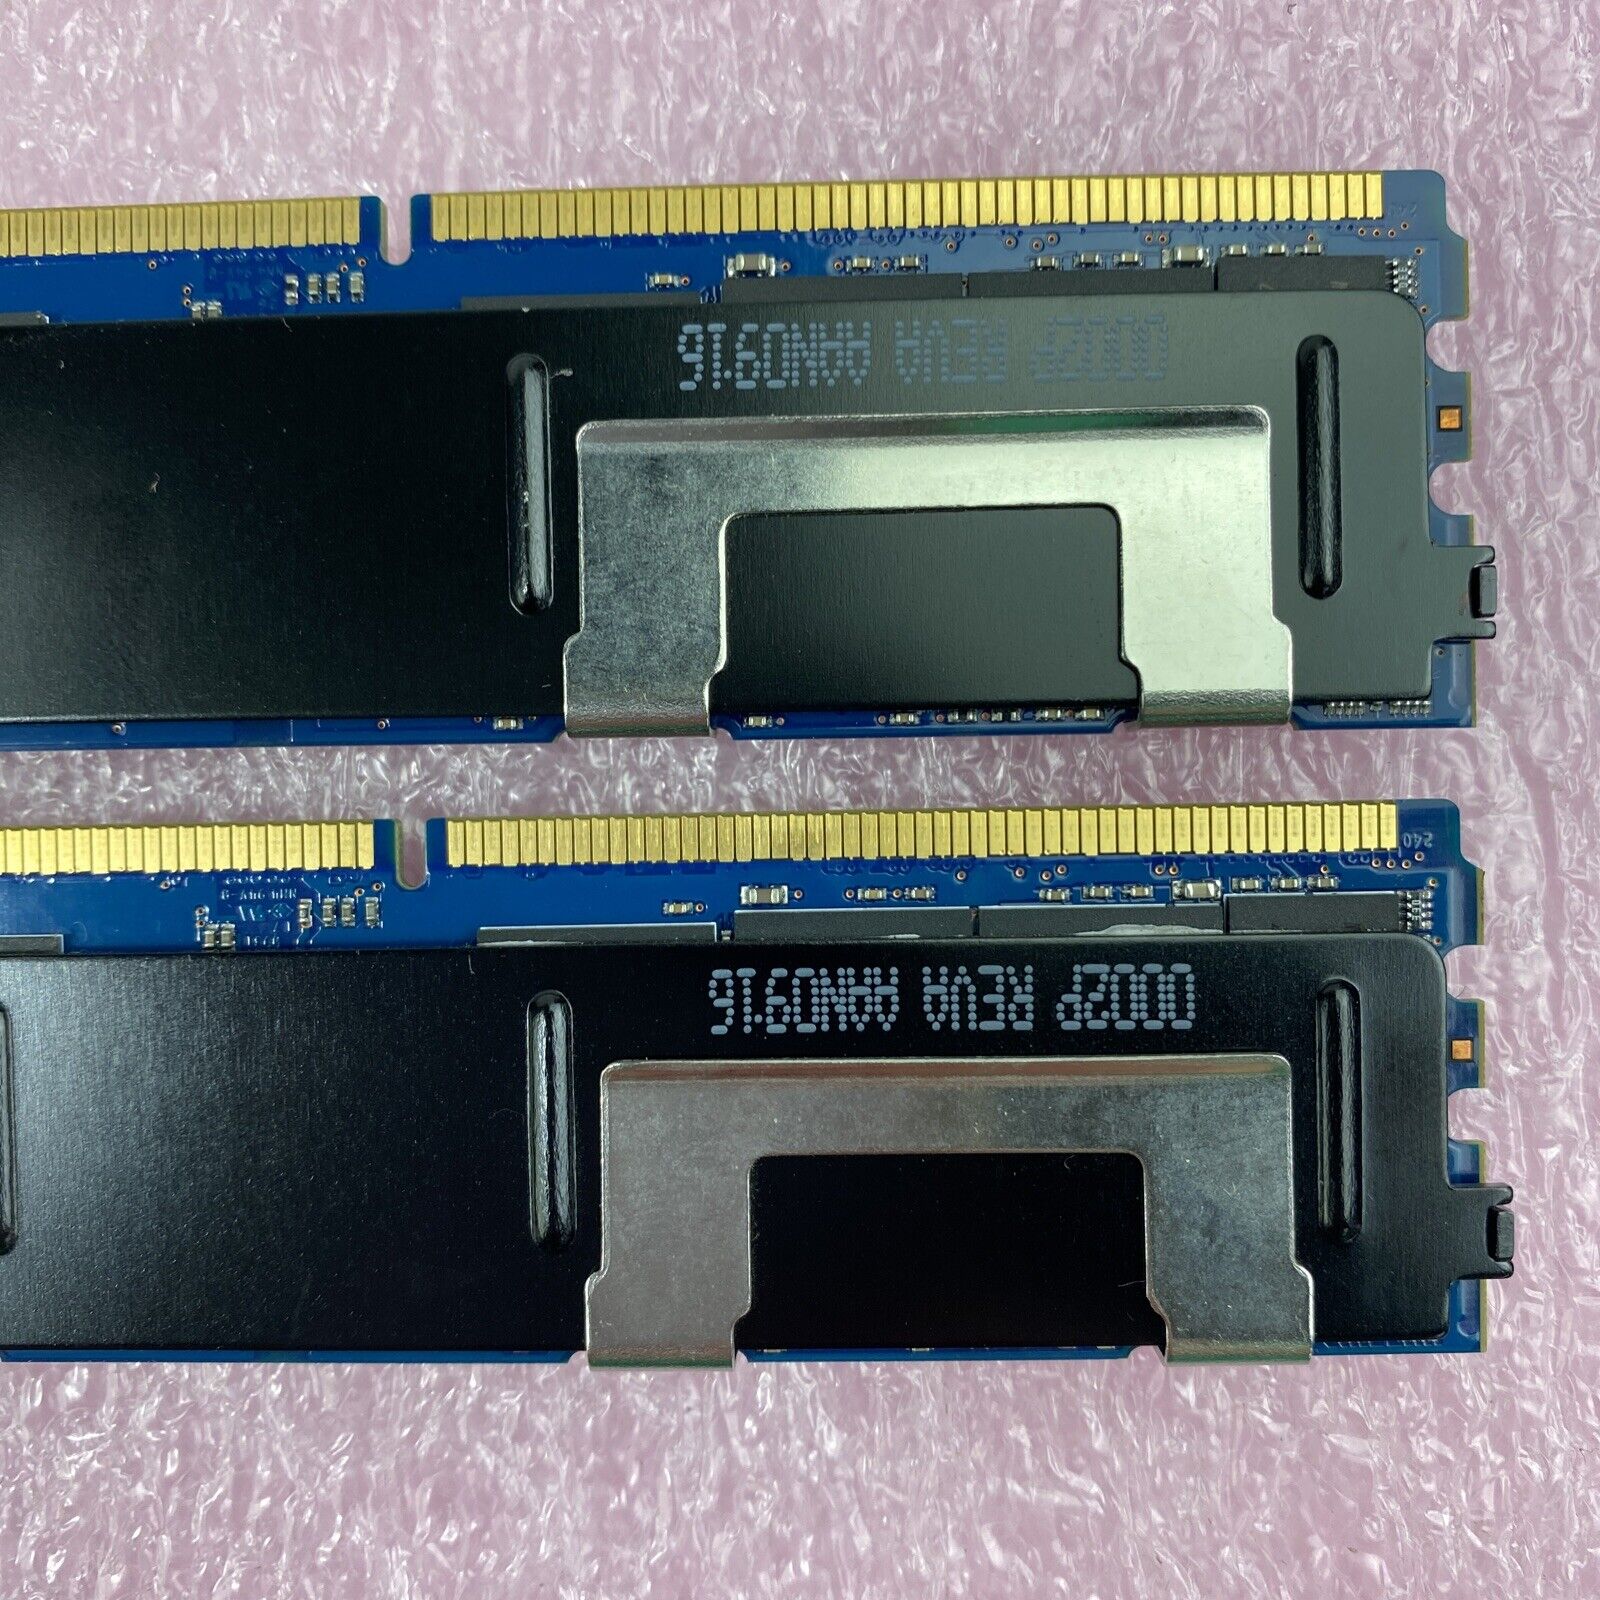 2x 4GB Nanya HP 398708-061 PC2-5300F 667MHz 2Rx4 ECC DDR2 FBDIMM Server Memory